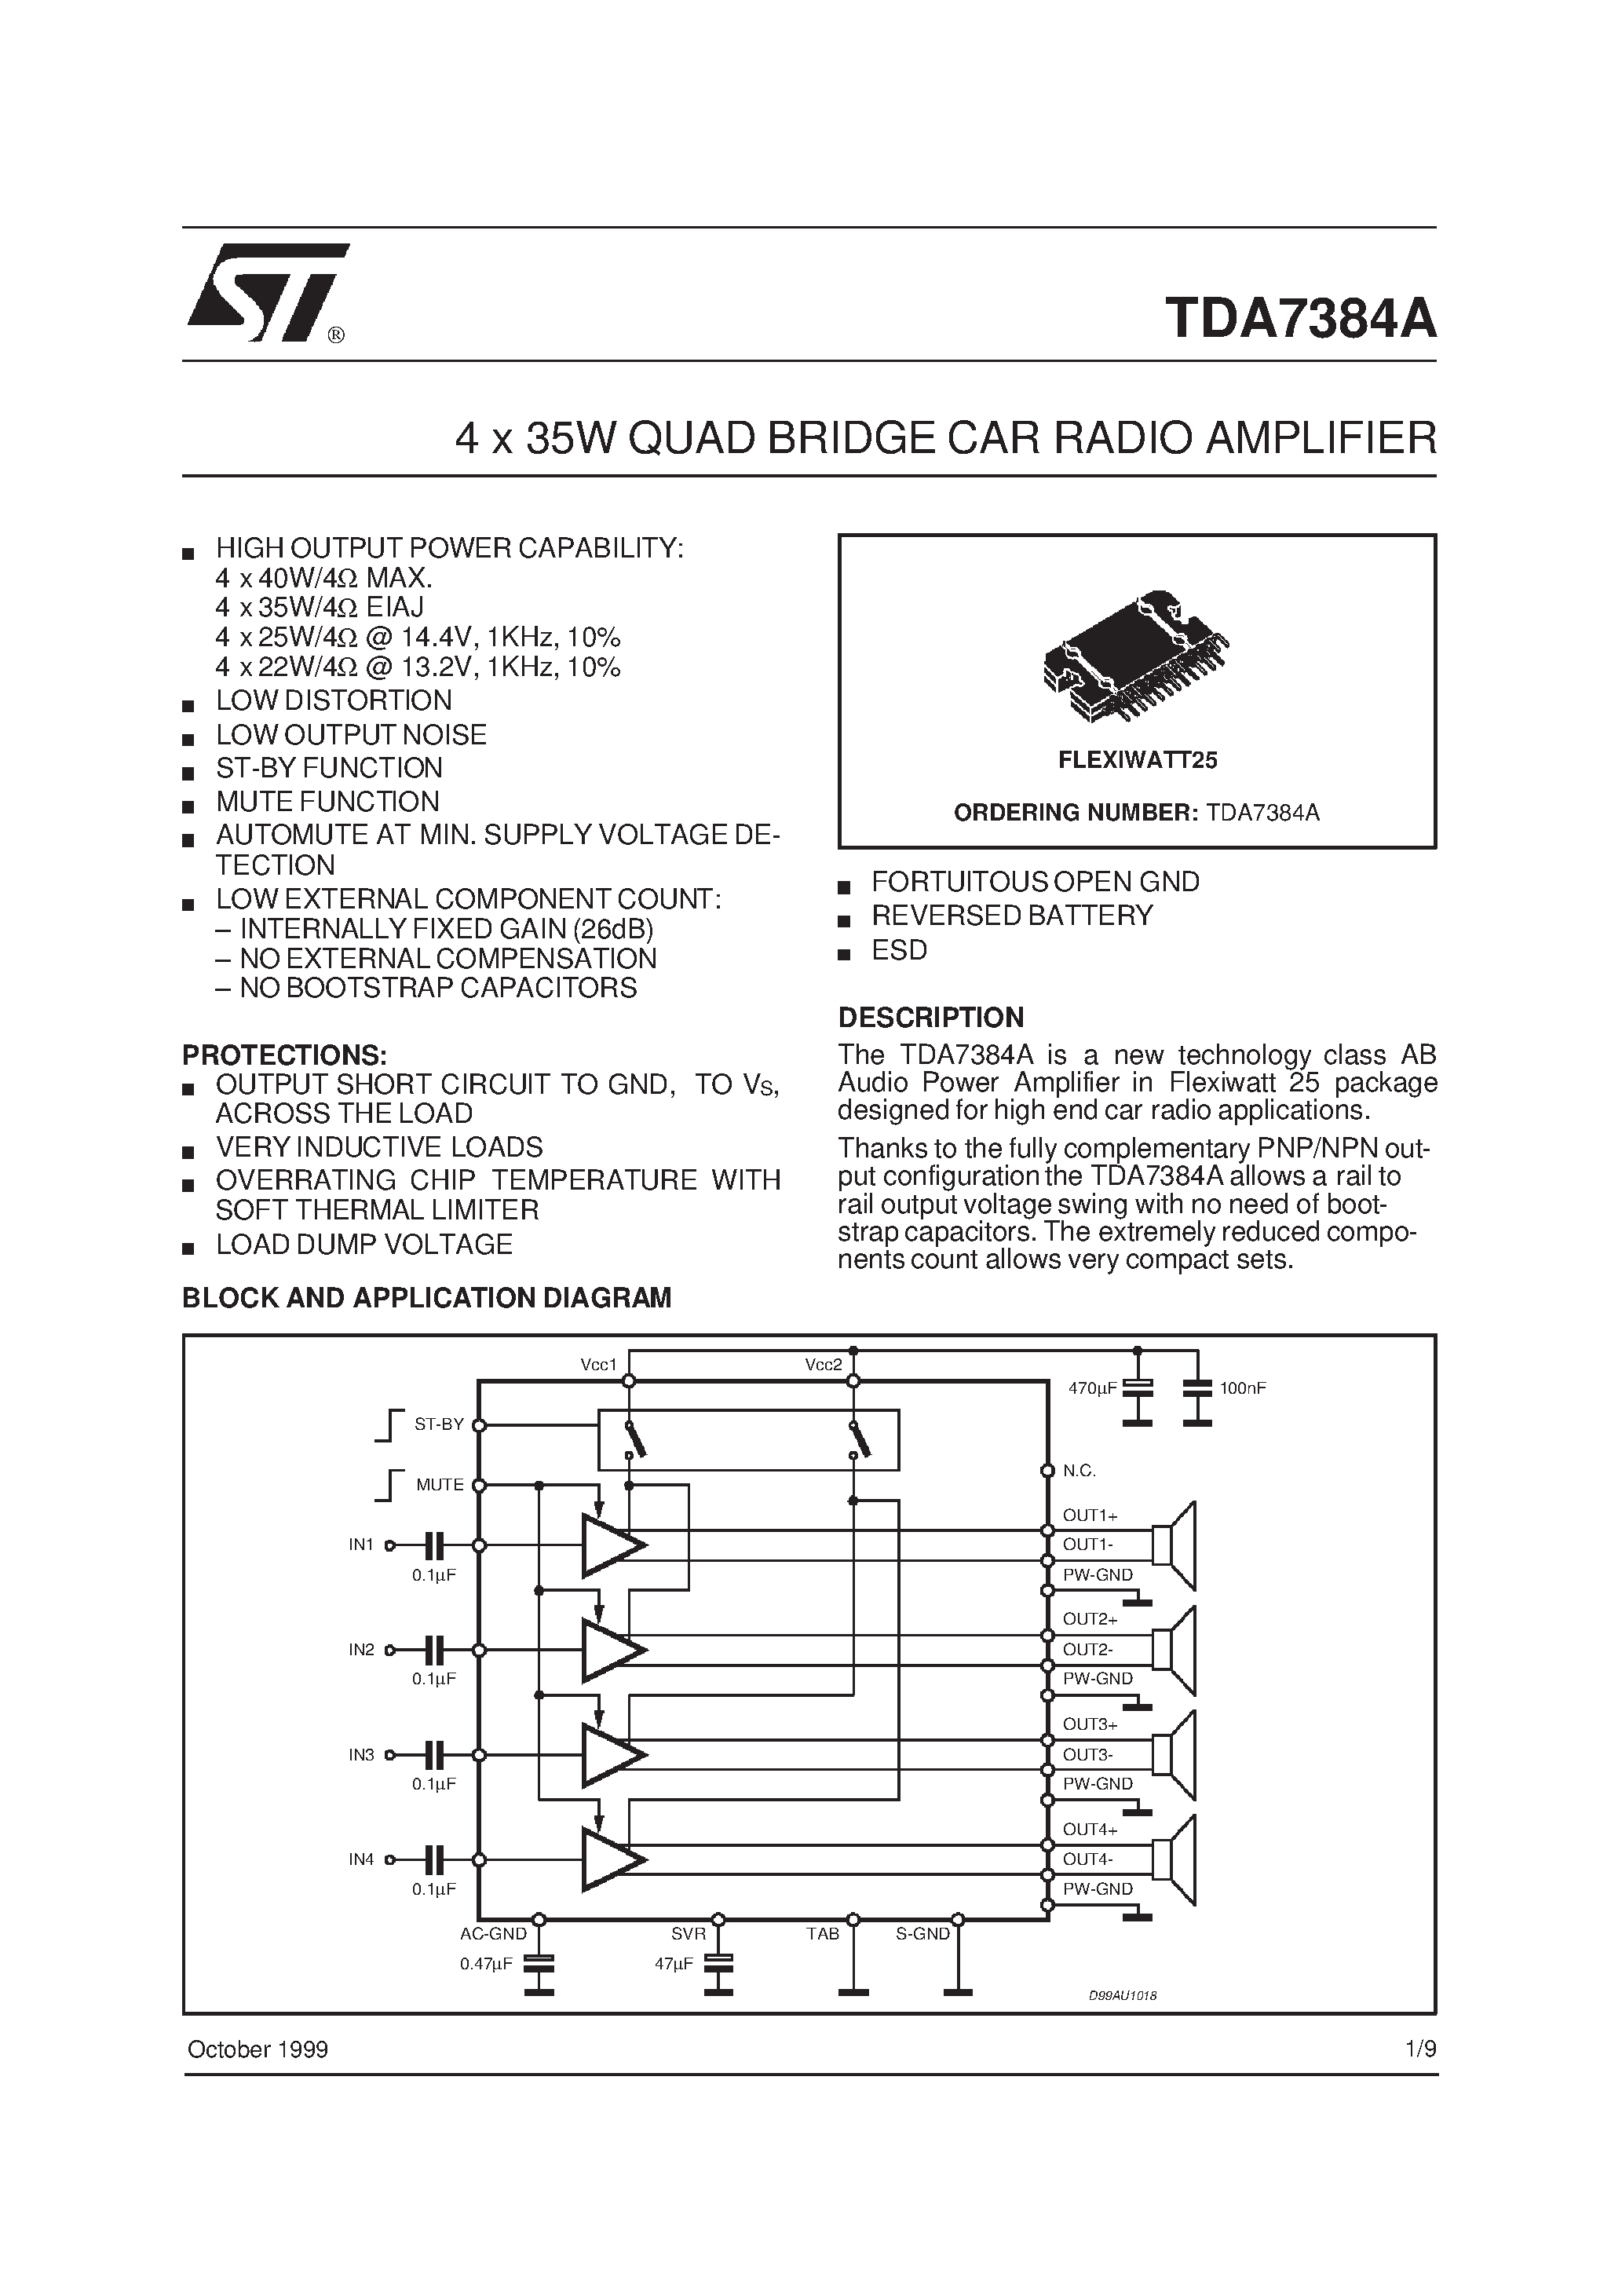 Datasheet TDA-7384 - 4 x 35W QUAD BRIDGE CAR RADIO AMPLIFIER page 1